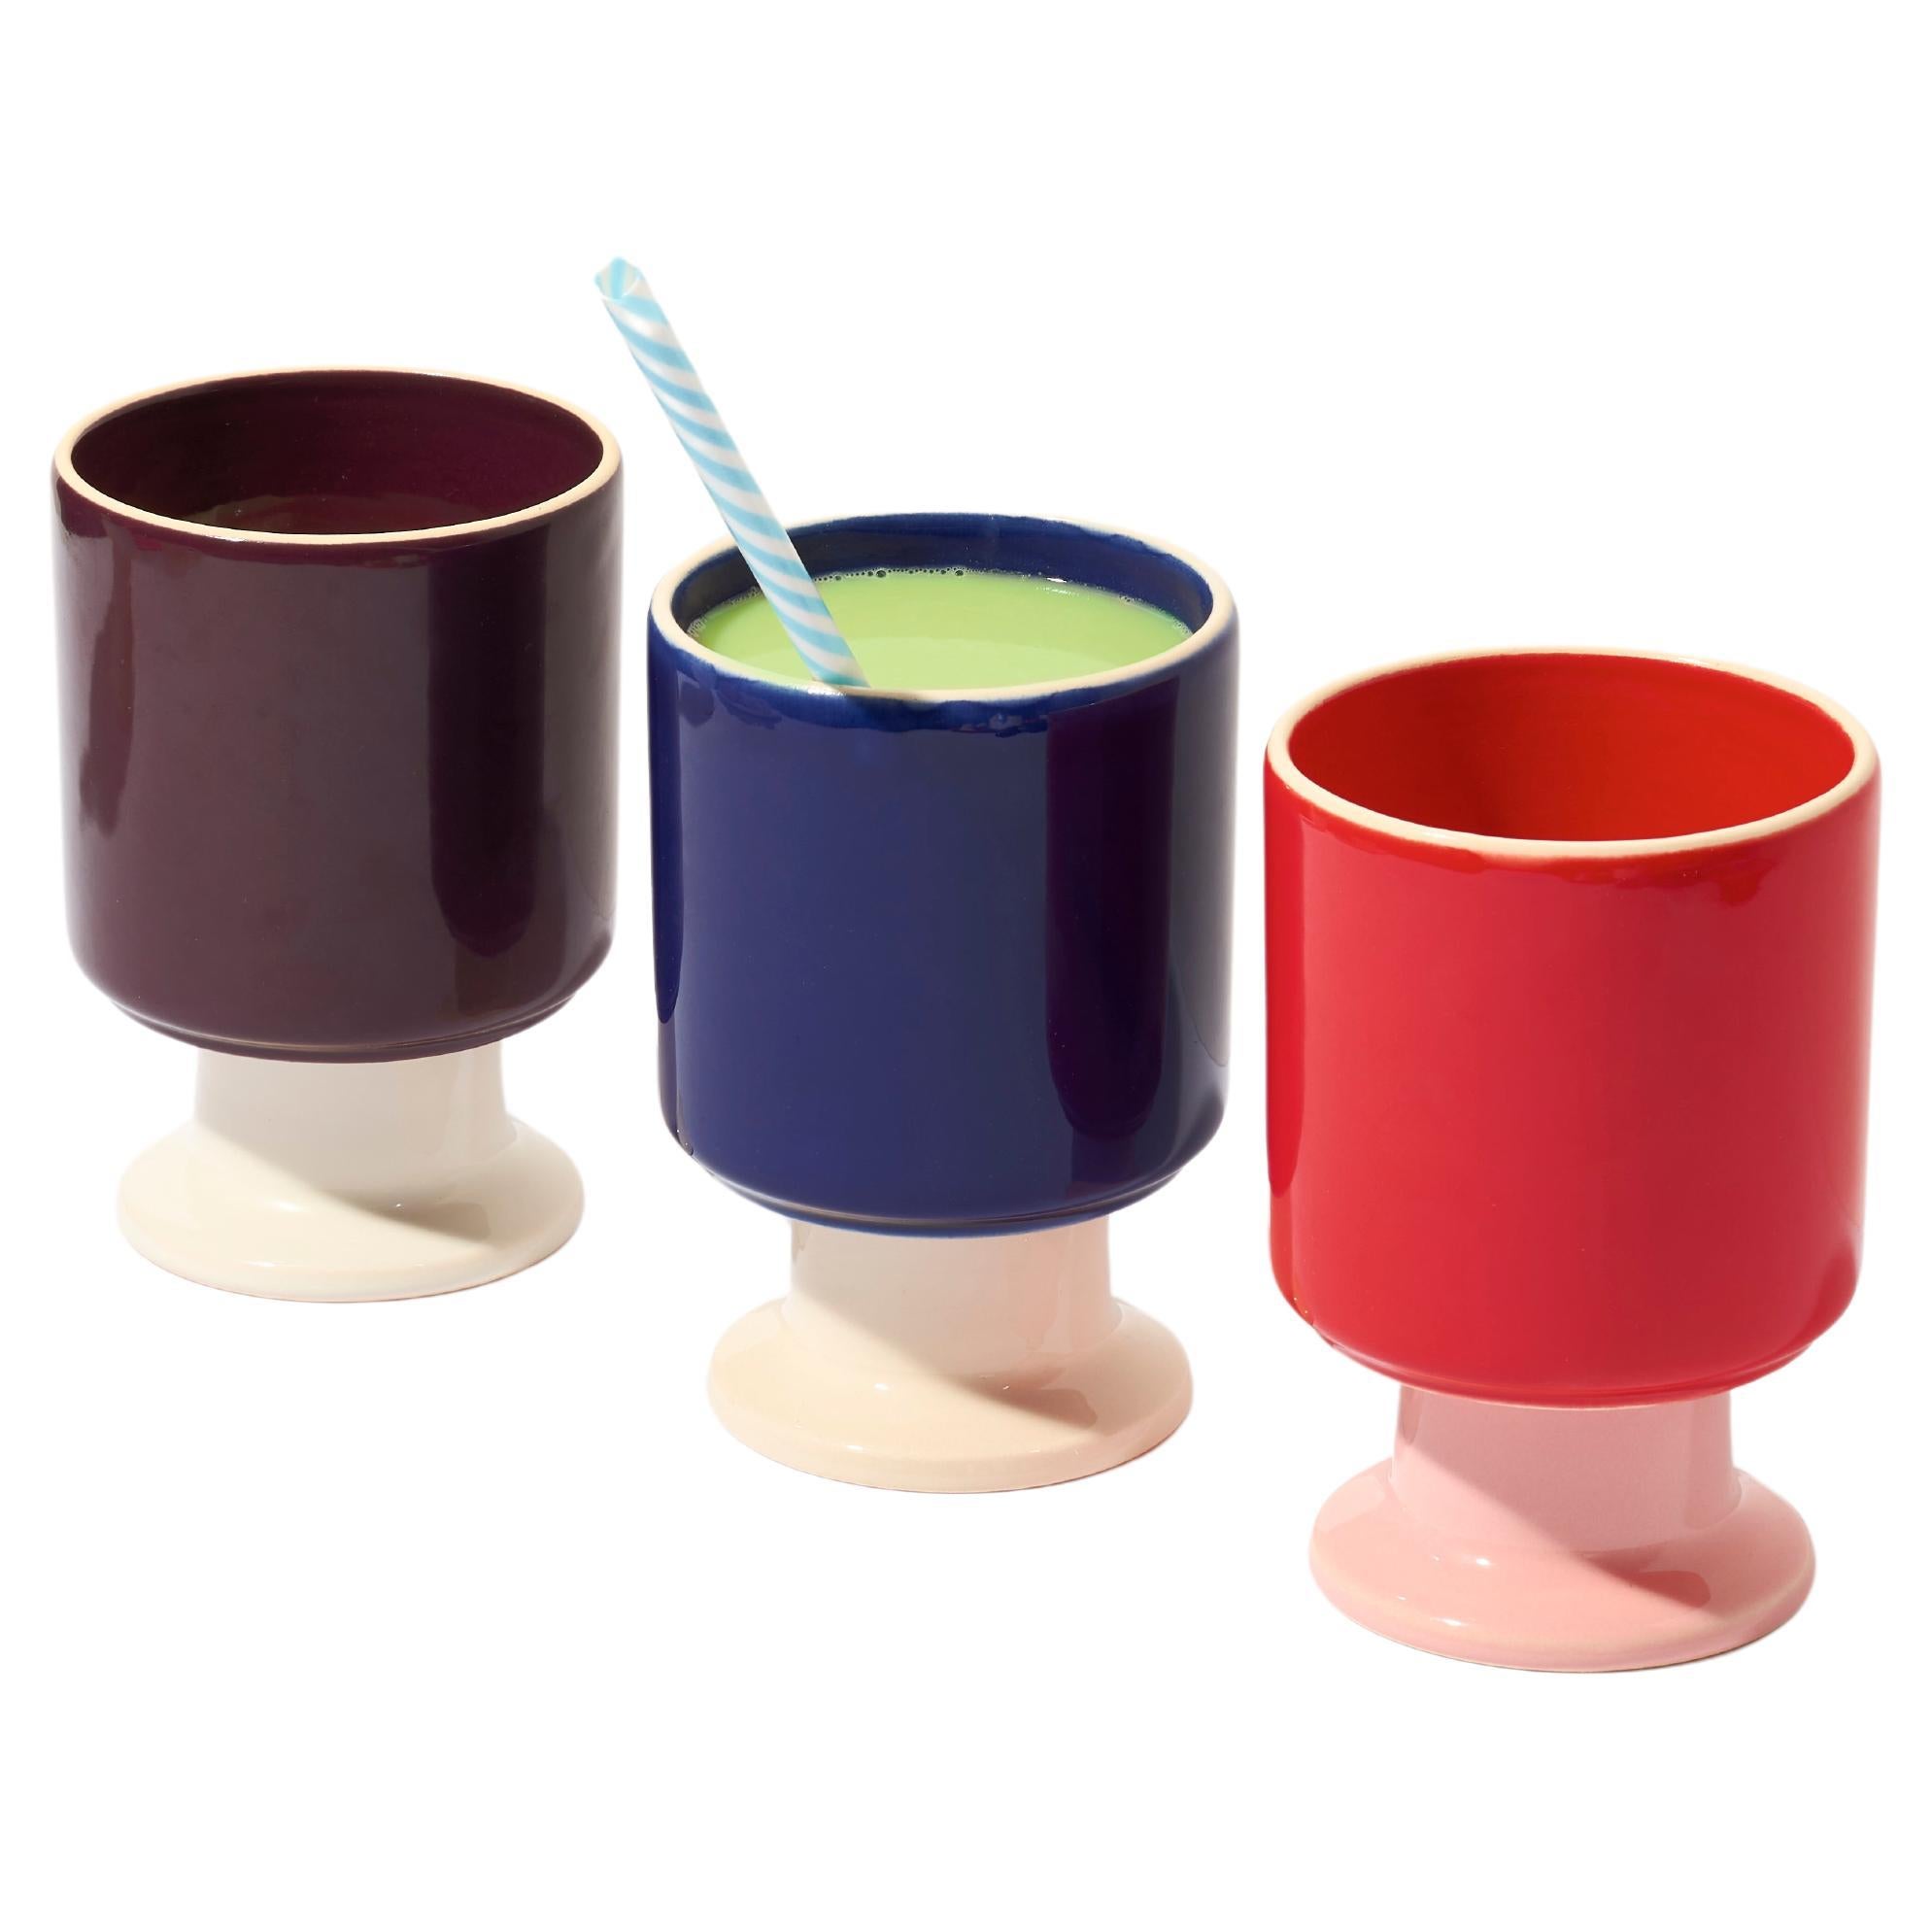 WIT Mug set of 3 / Kobalt / Red / Plum by Malwina Konopacka